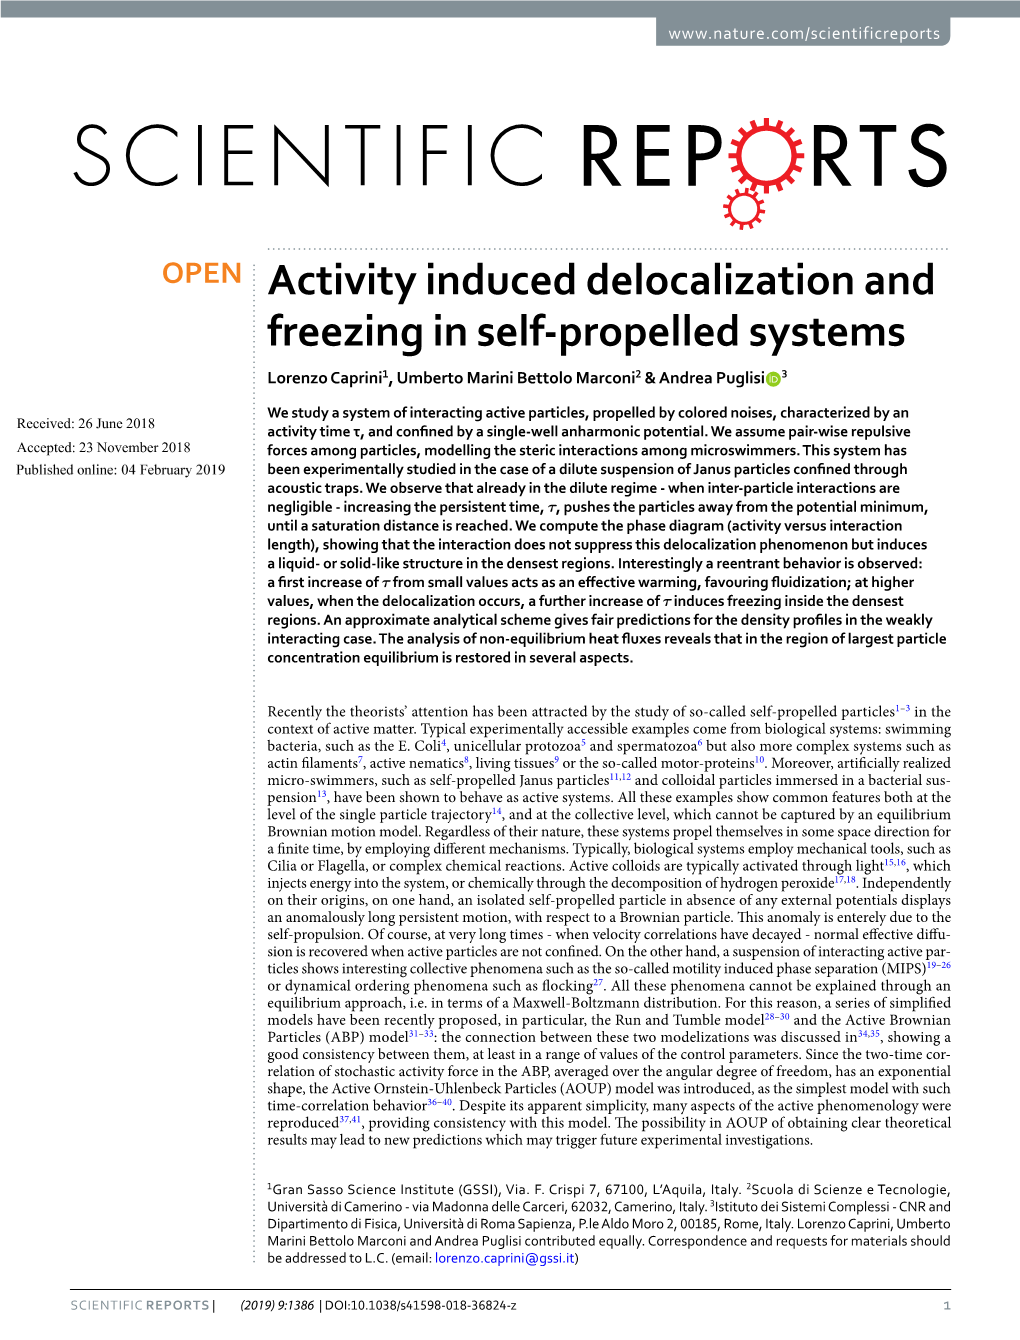 Activity Induced Delocalization and Freezing in Self-Propelled Systems Lorenzo Caprini1, Umberto Marini Bettolo Marconi2 & Andrea Puglisi 3